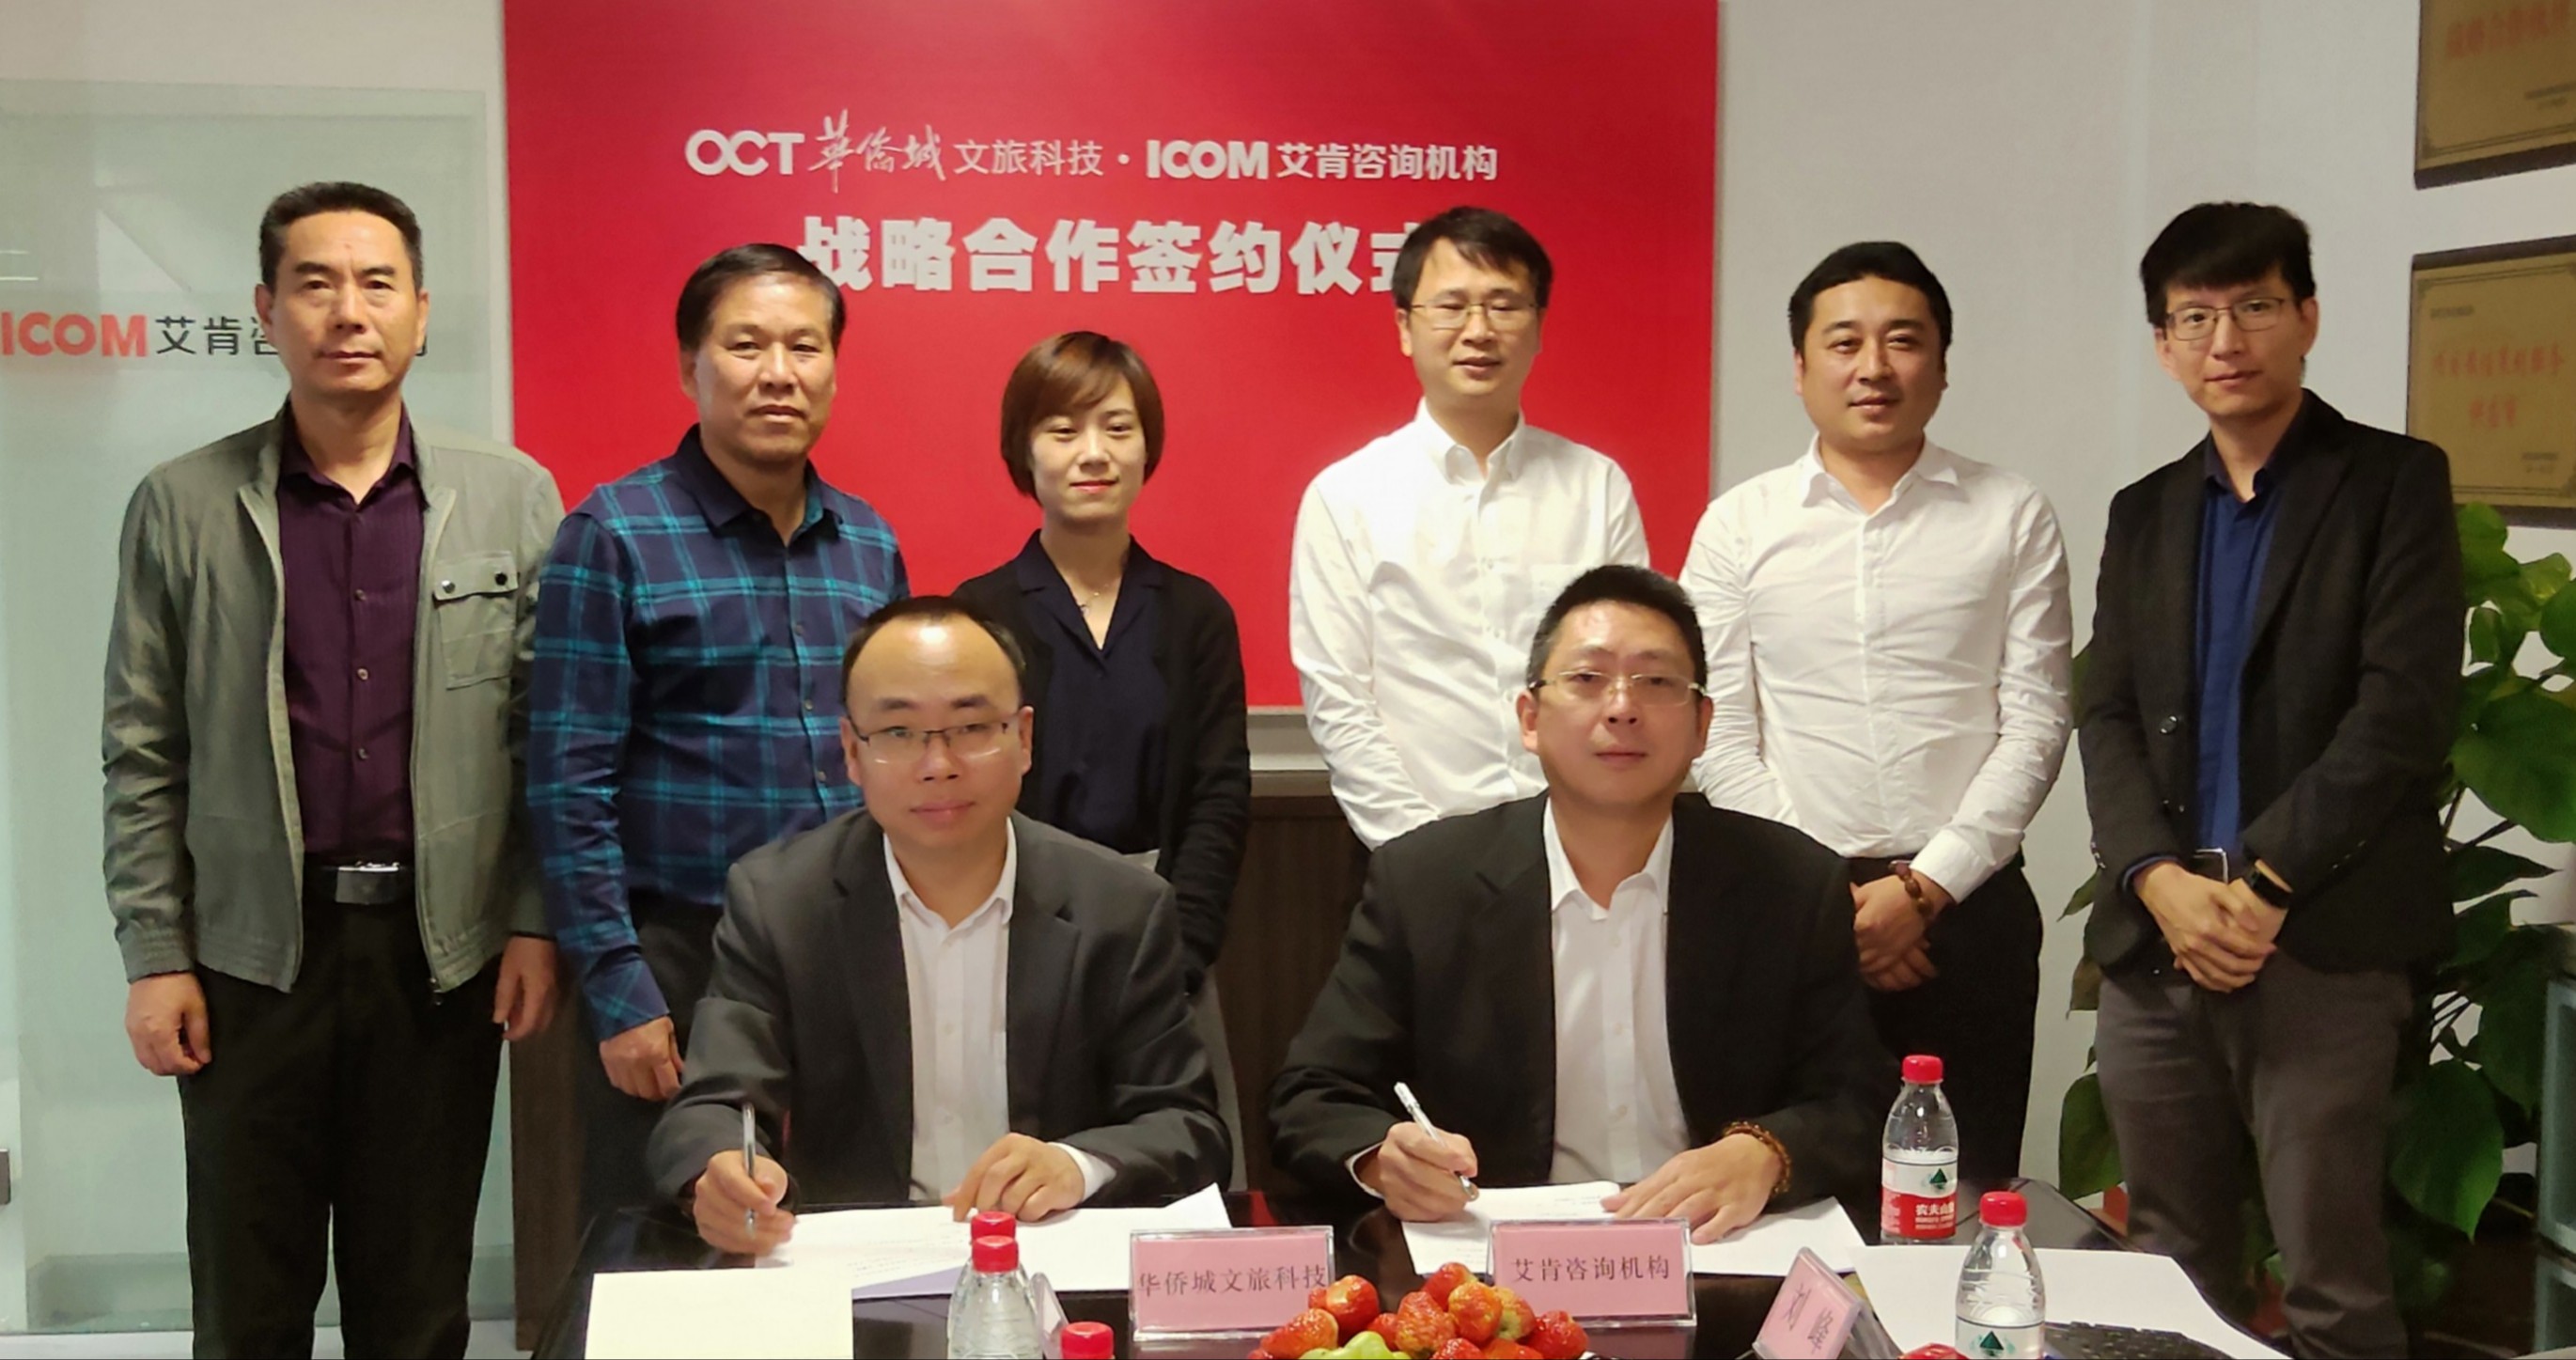 yabo.com机构与华侨城文旅科技公司战略合作签约仪式隆重举行